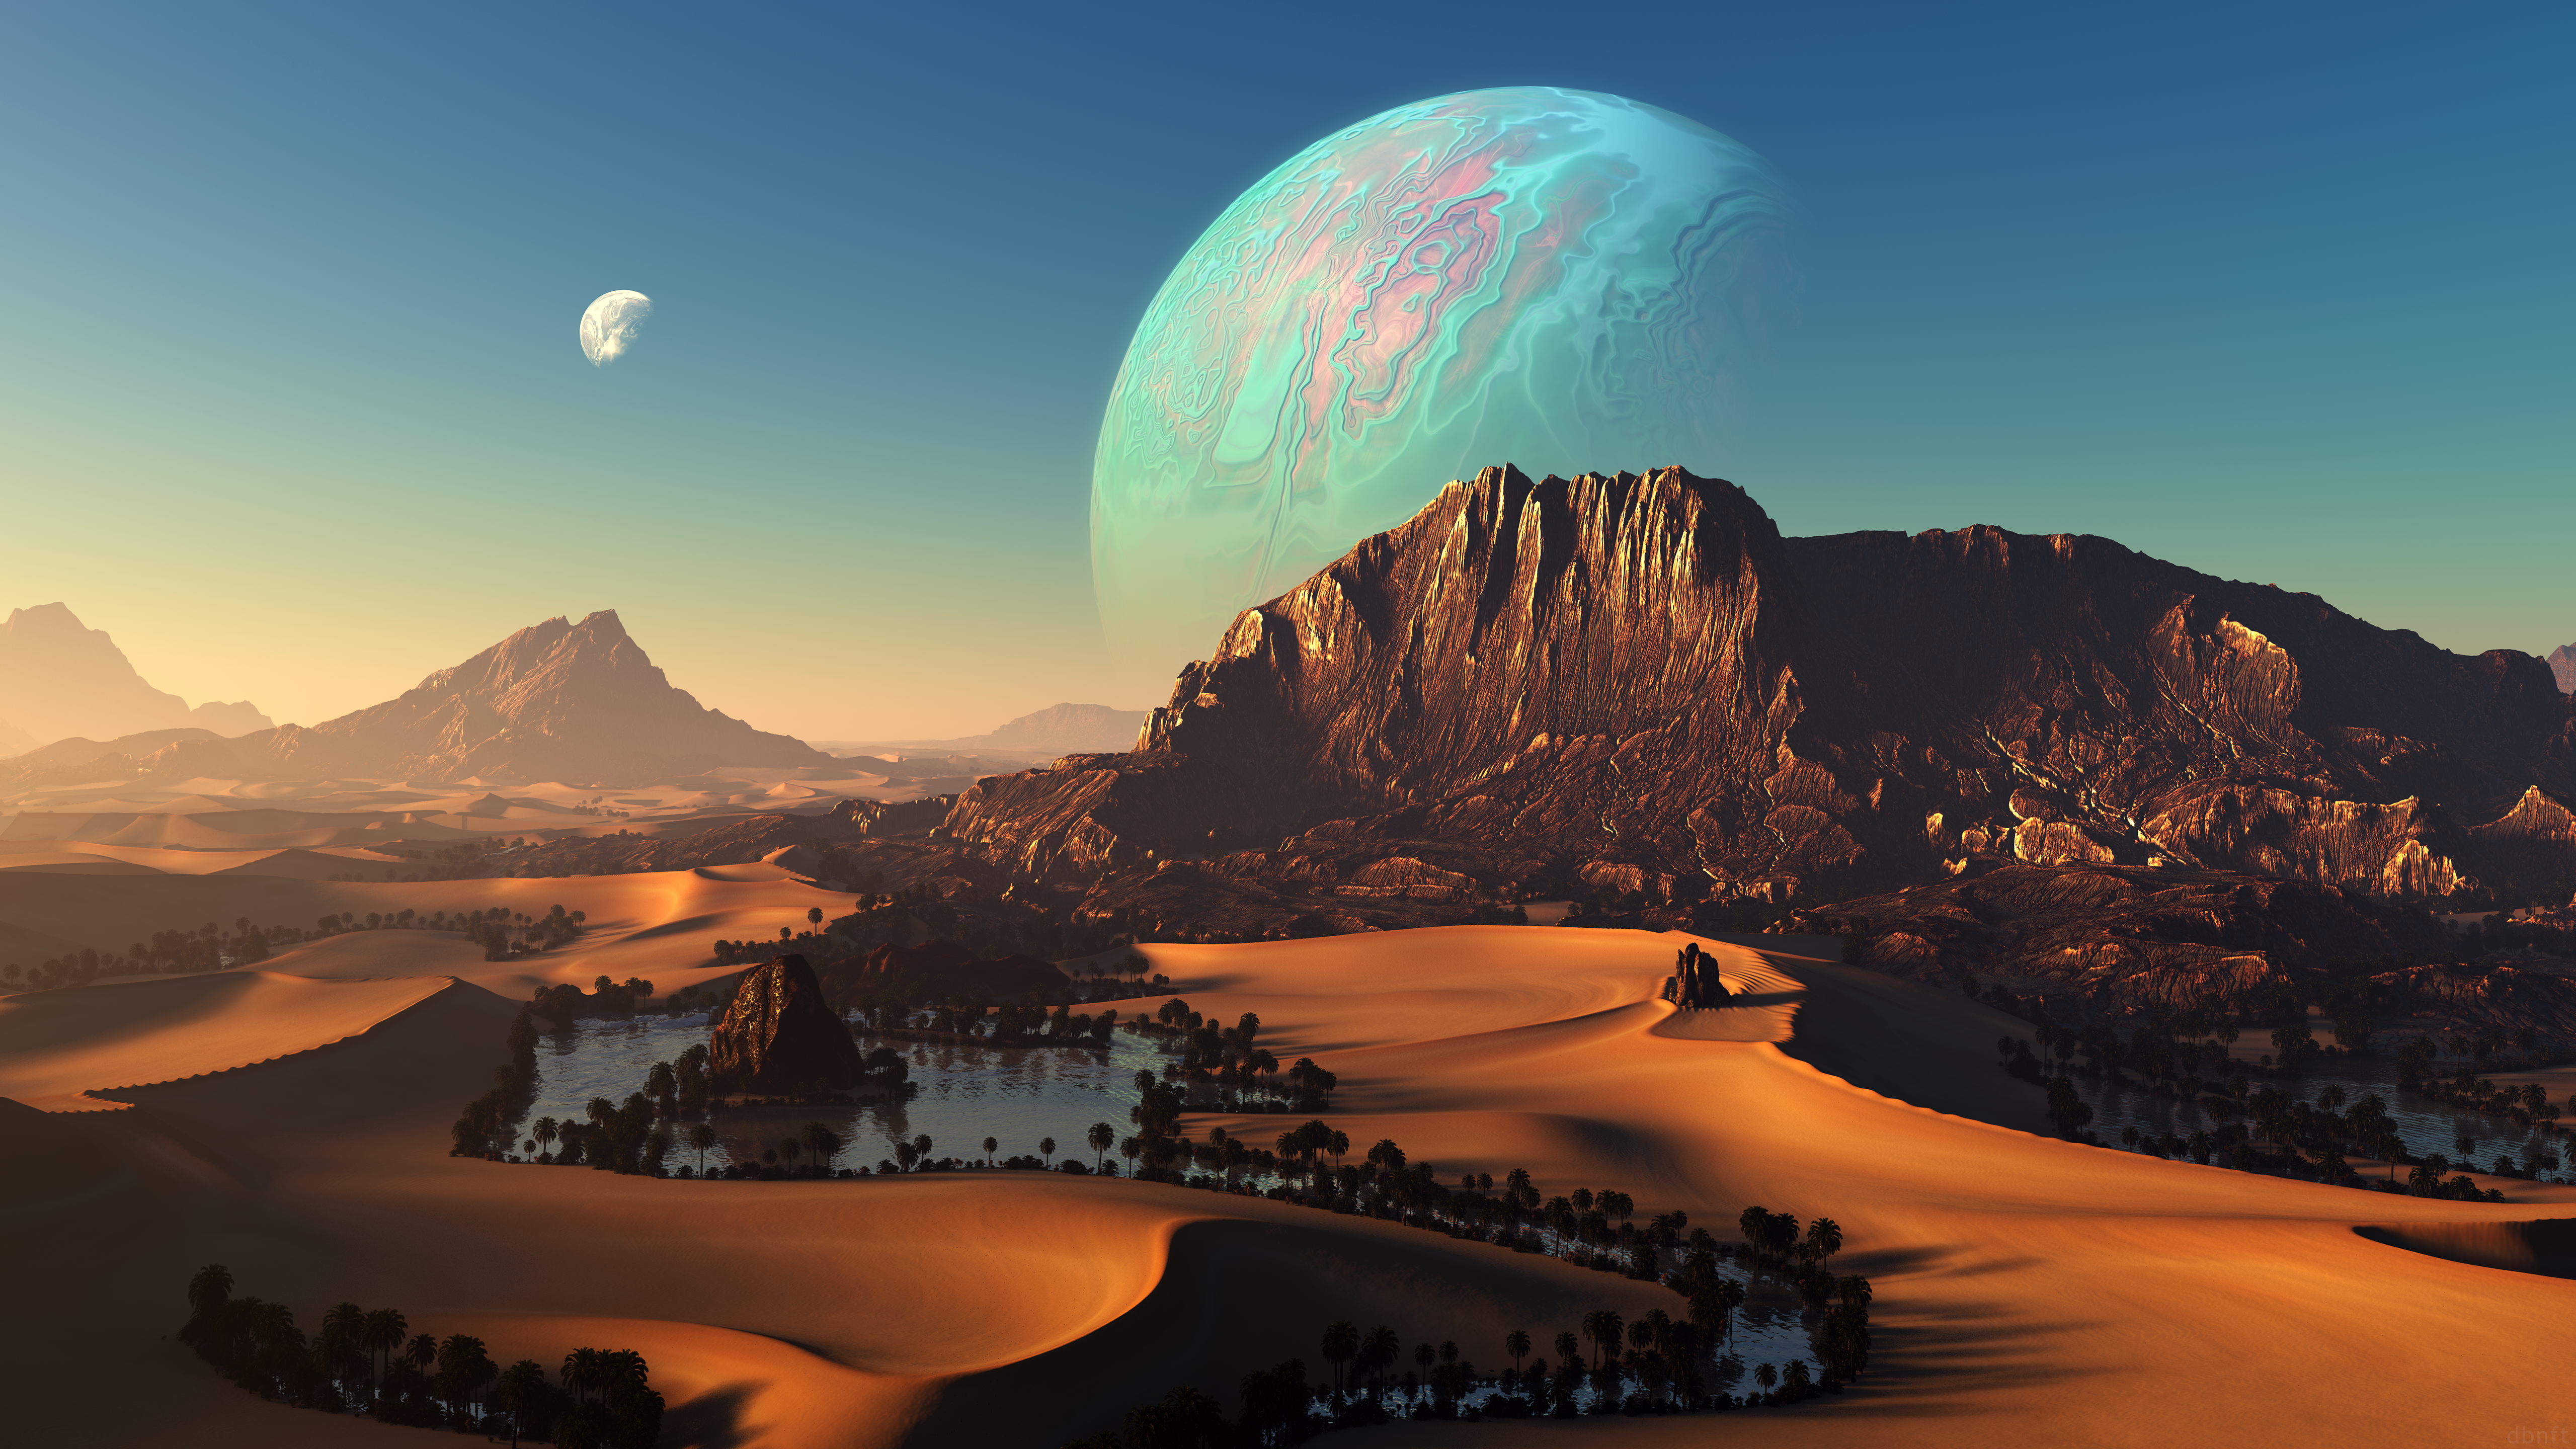 General 5120x2880 Ryan Bliss digital art artwork CGI nature landscape desert oasis planet mountains sand palm trees